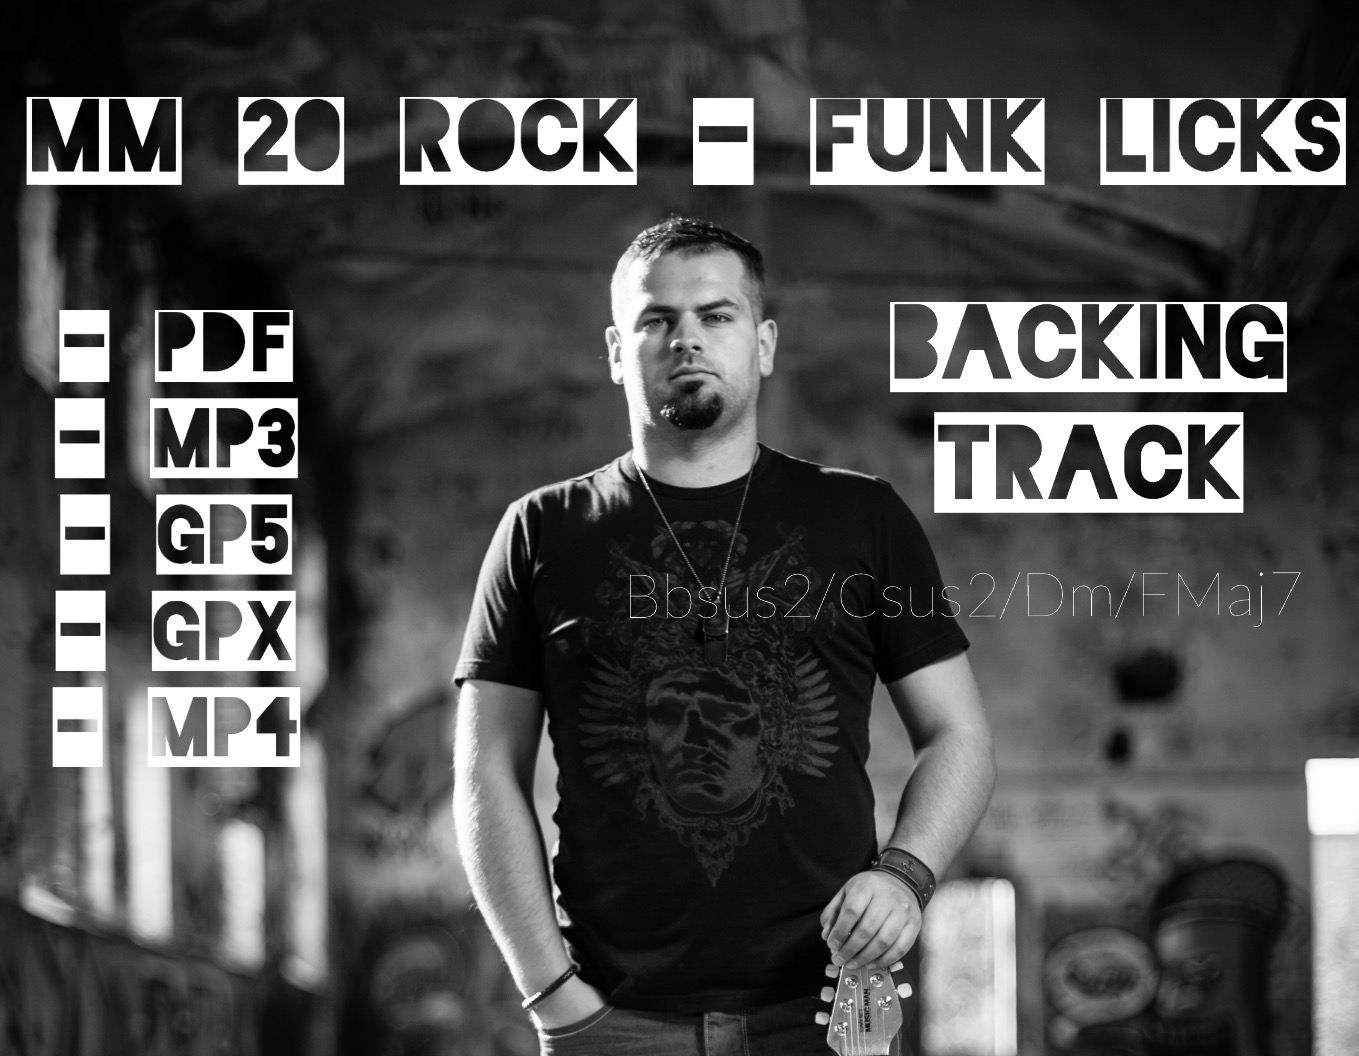 MM 20 Rock-Funk Licks, Full Backing Track, D minor, 120bpm